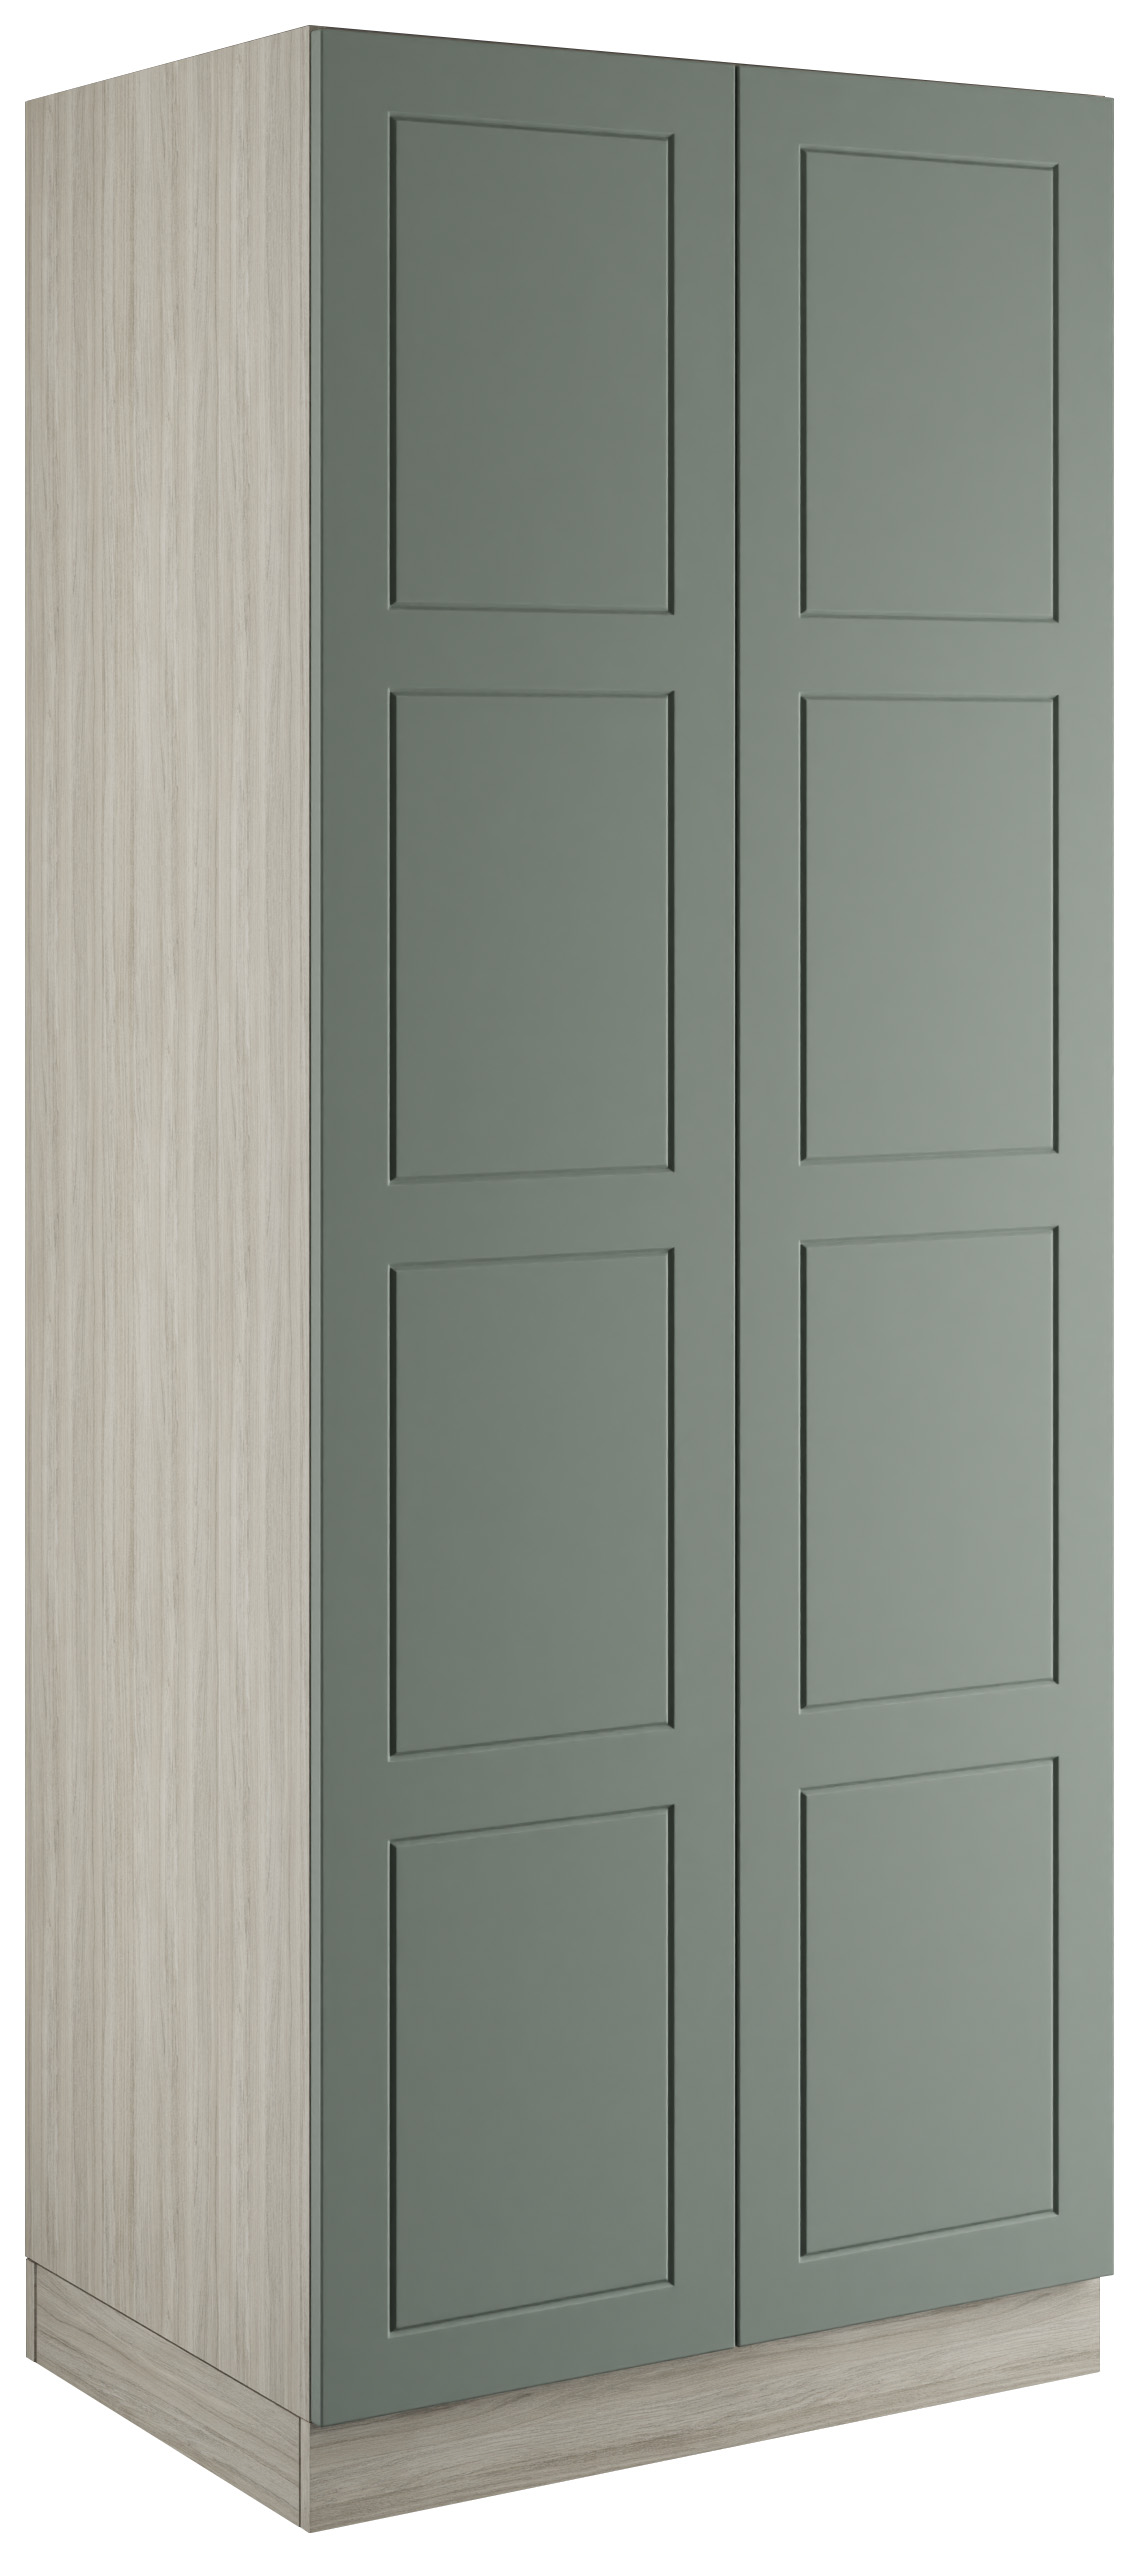 Bramham Sage Green Double Wardrobe with Shelves - 900 x 2260 x 608mm